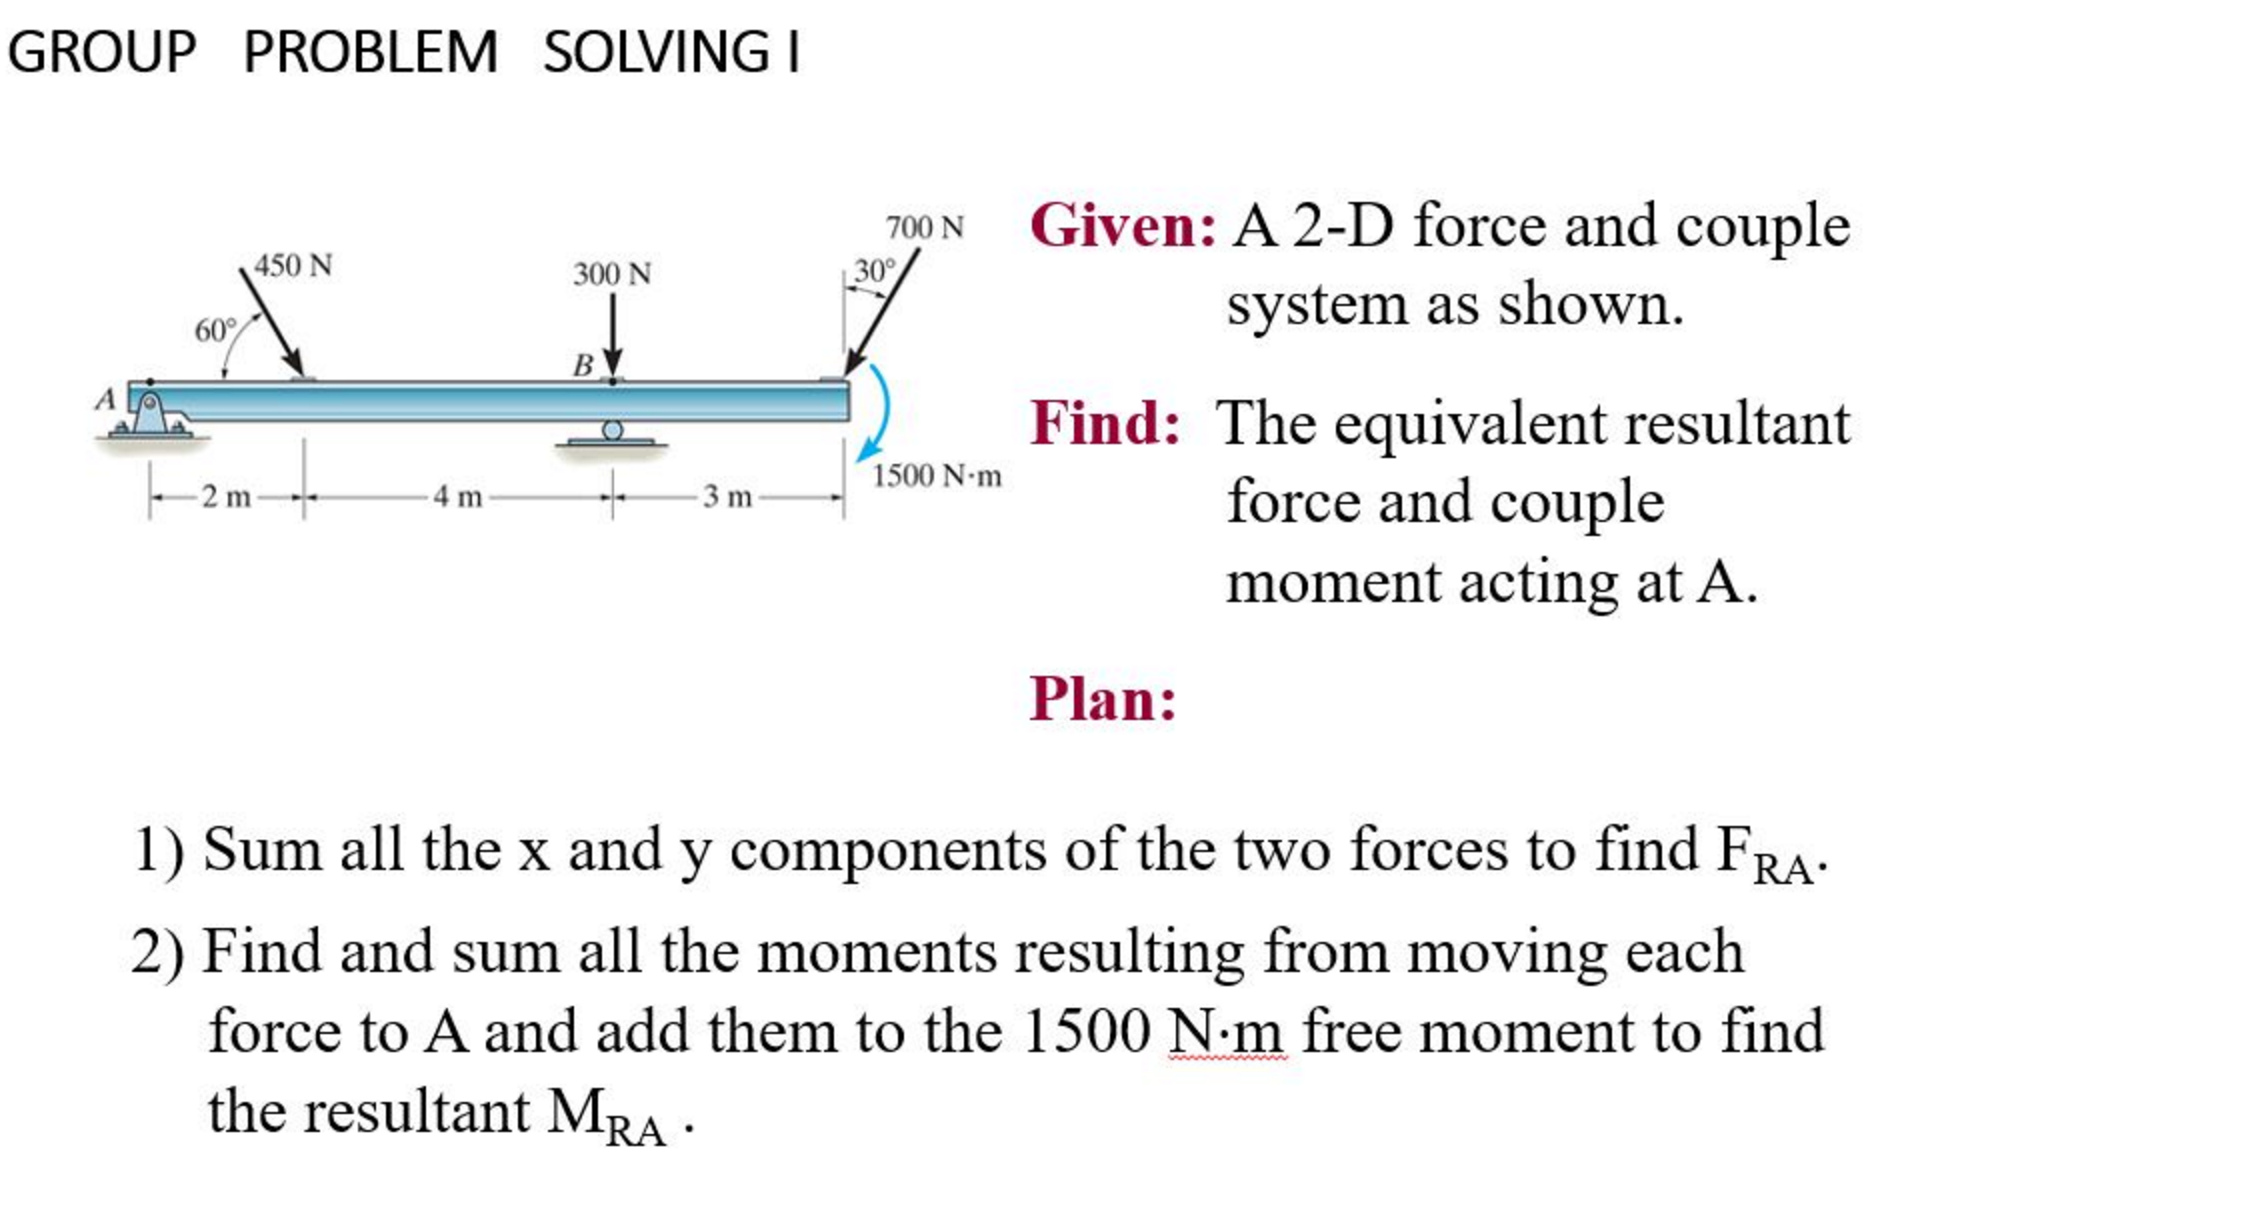 force system mathcad